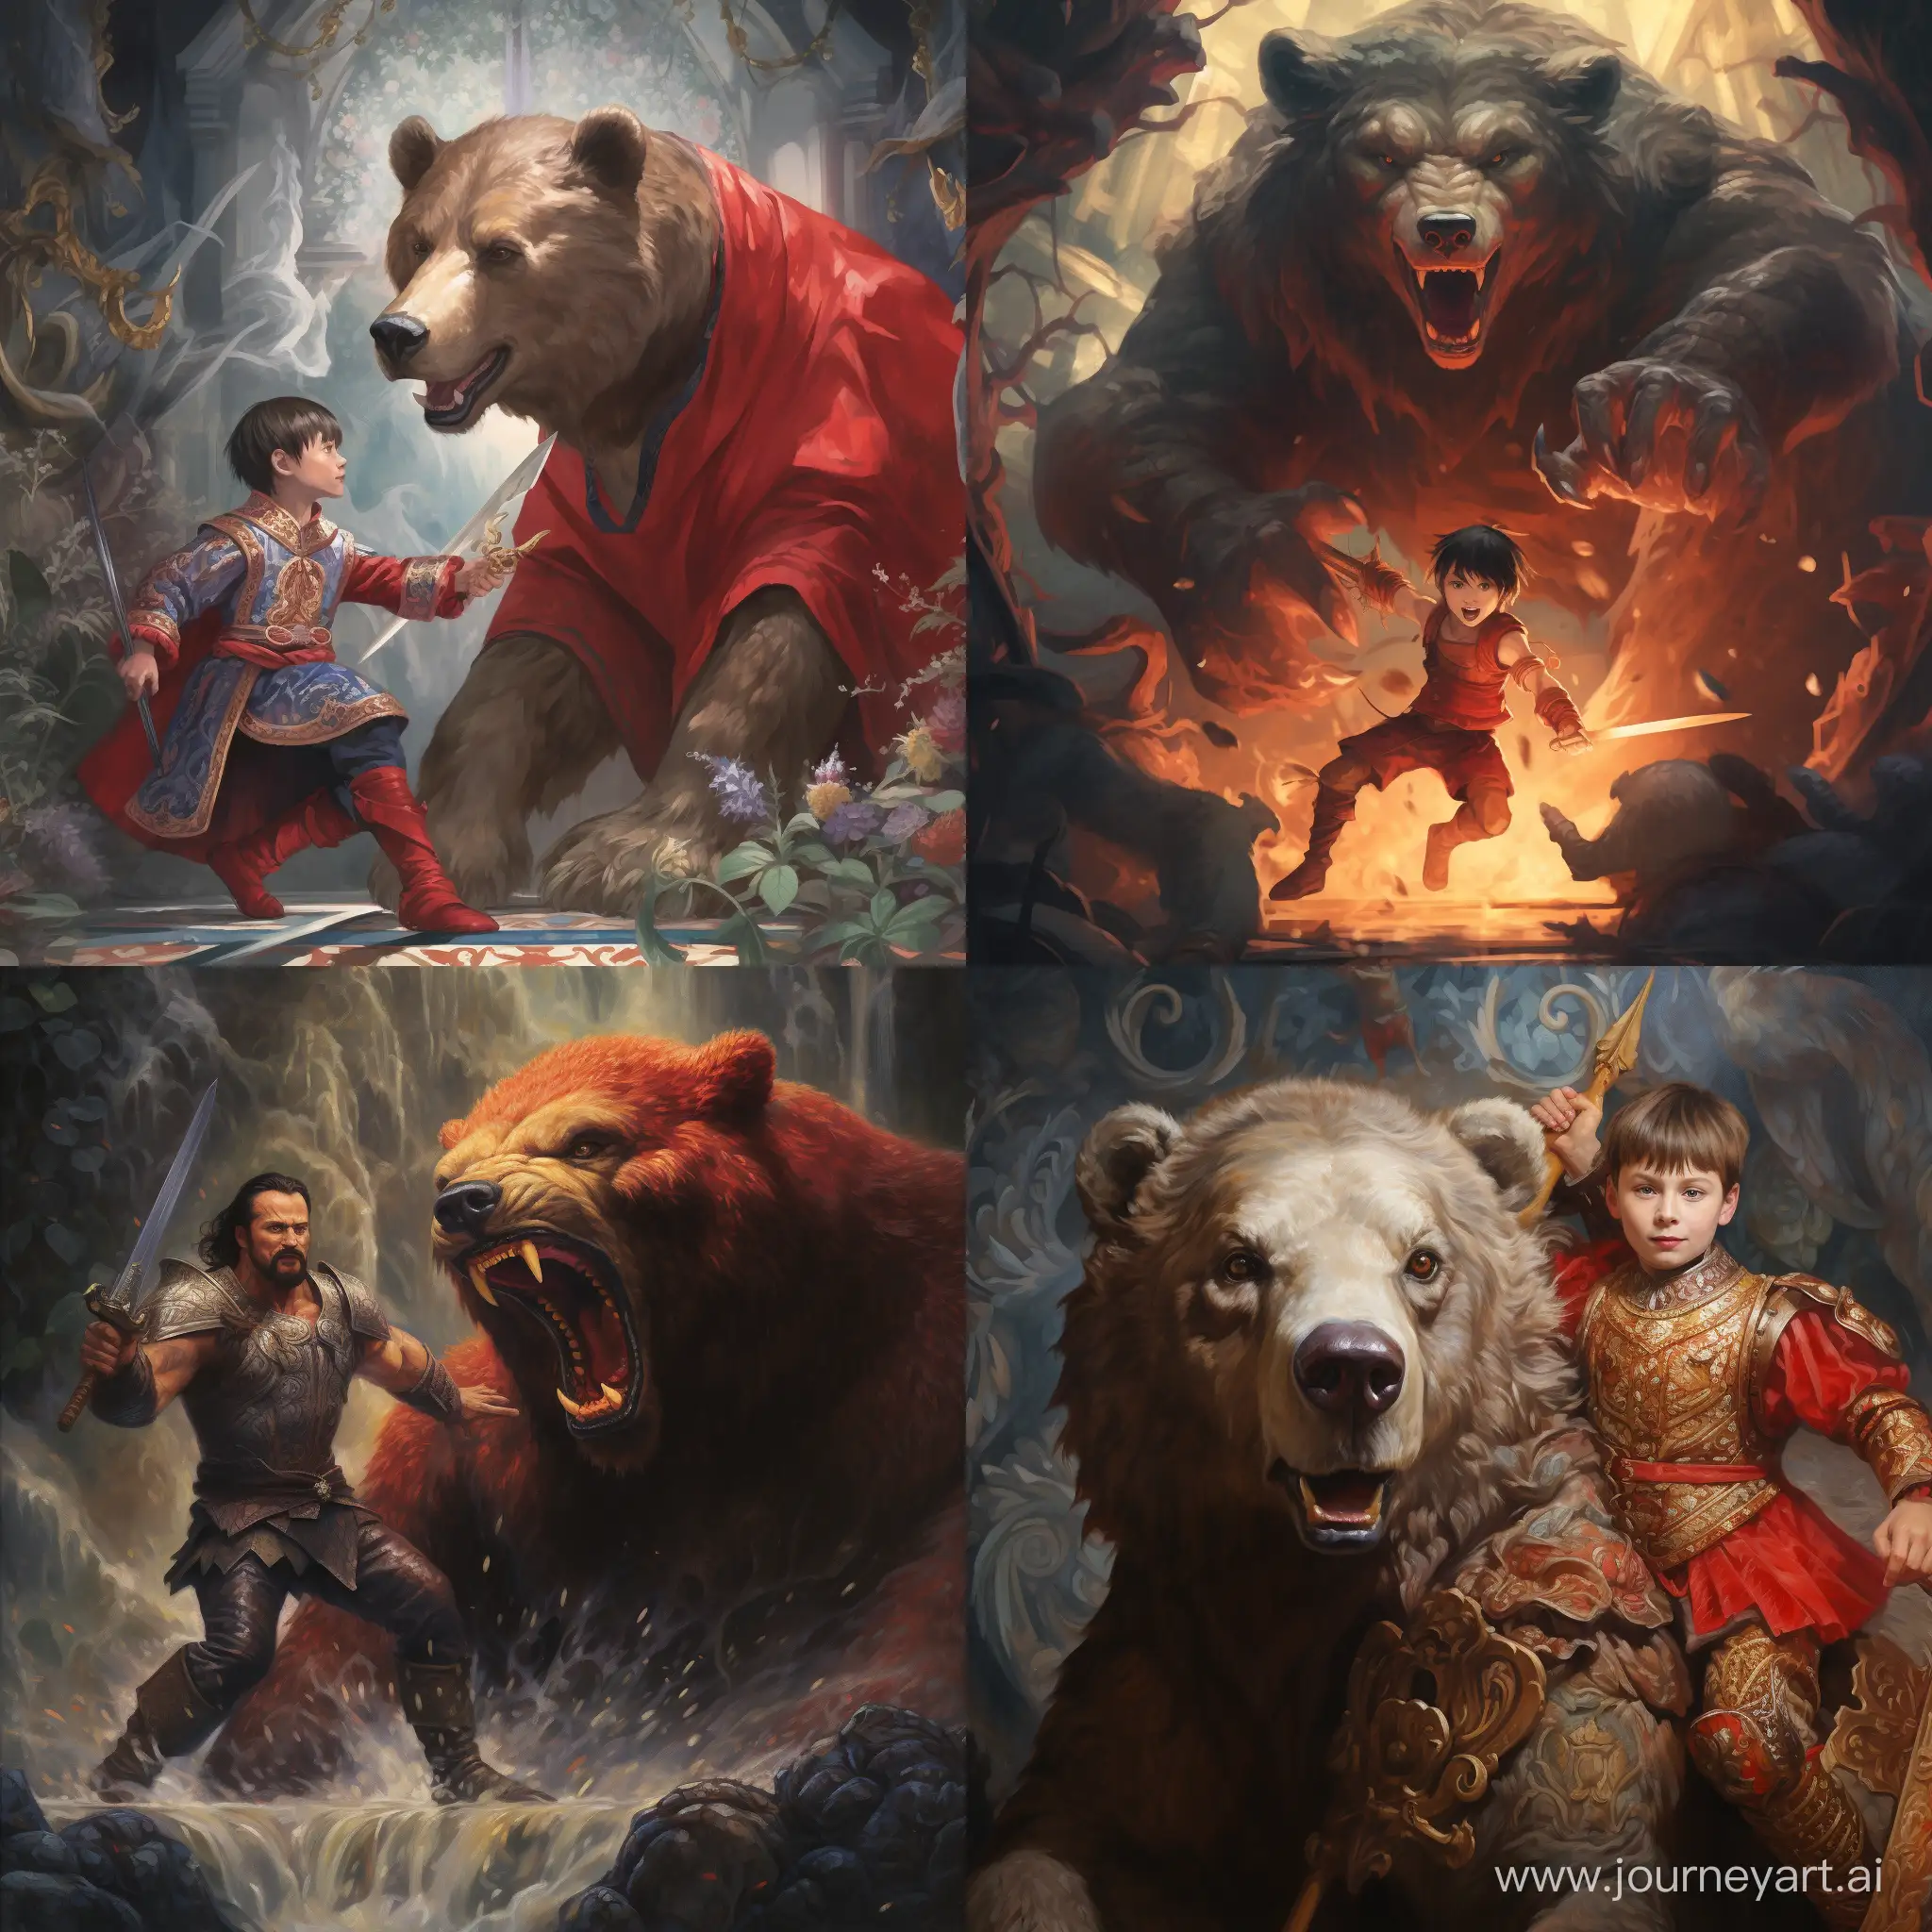 Mikhail-Triumphs-Over-a-Bear-in-Intense-11-Battle